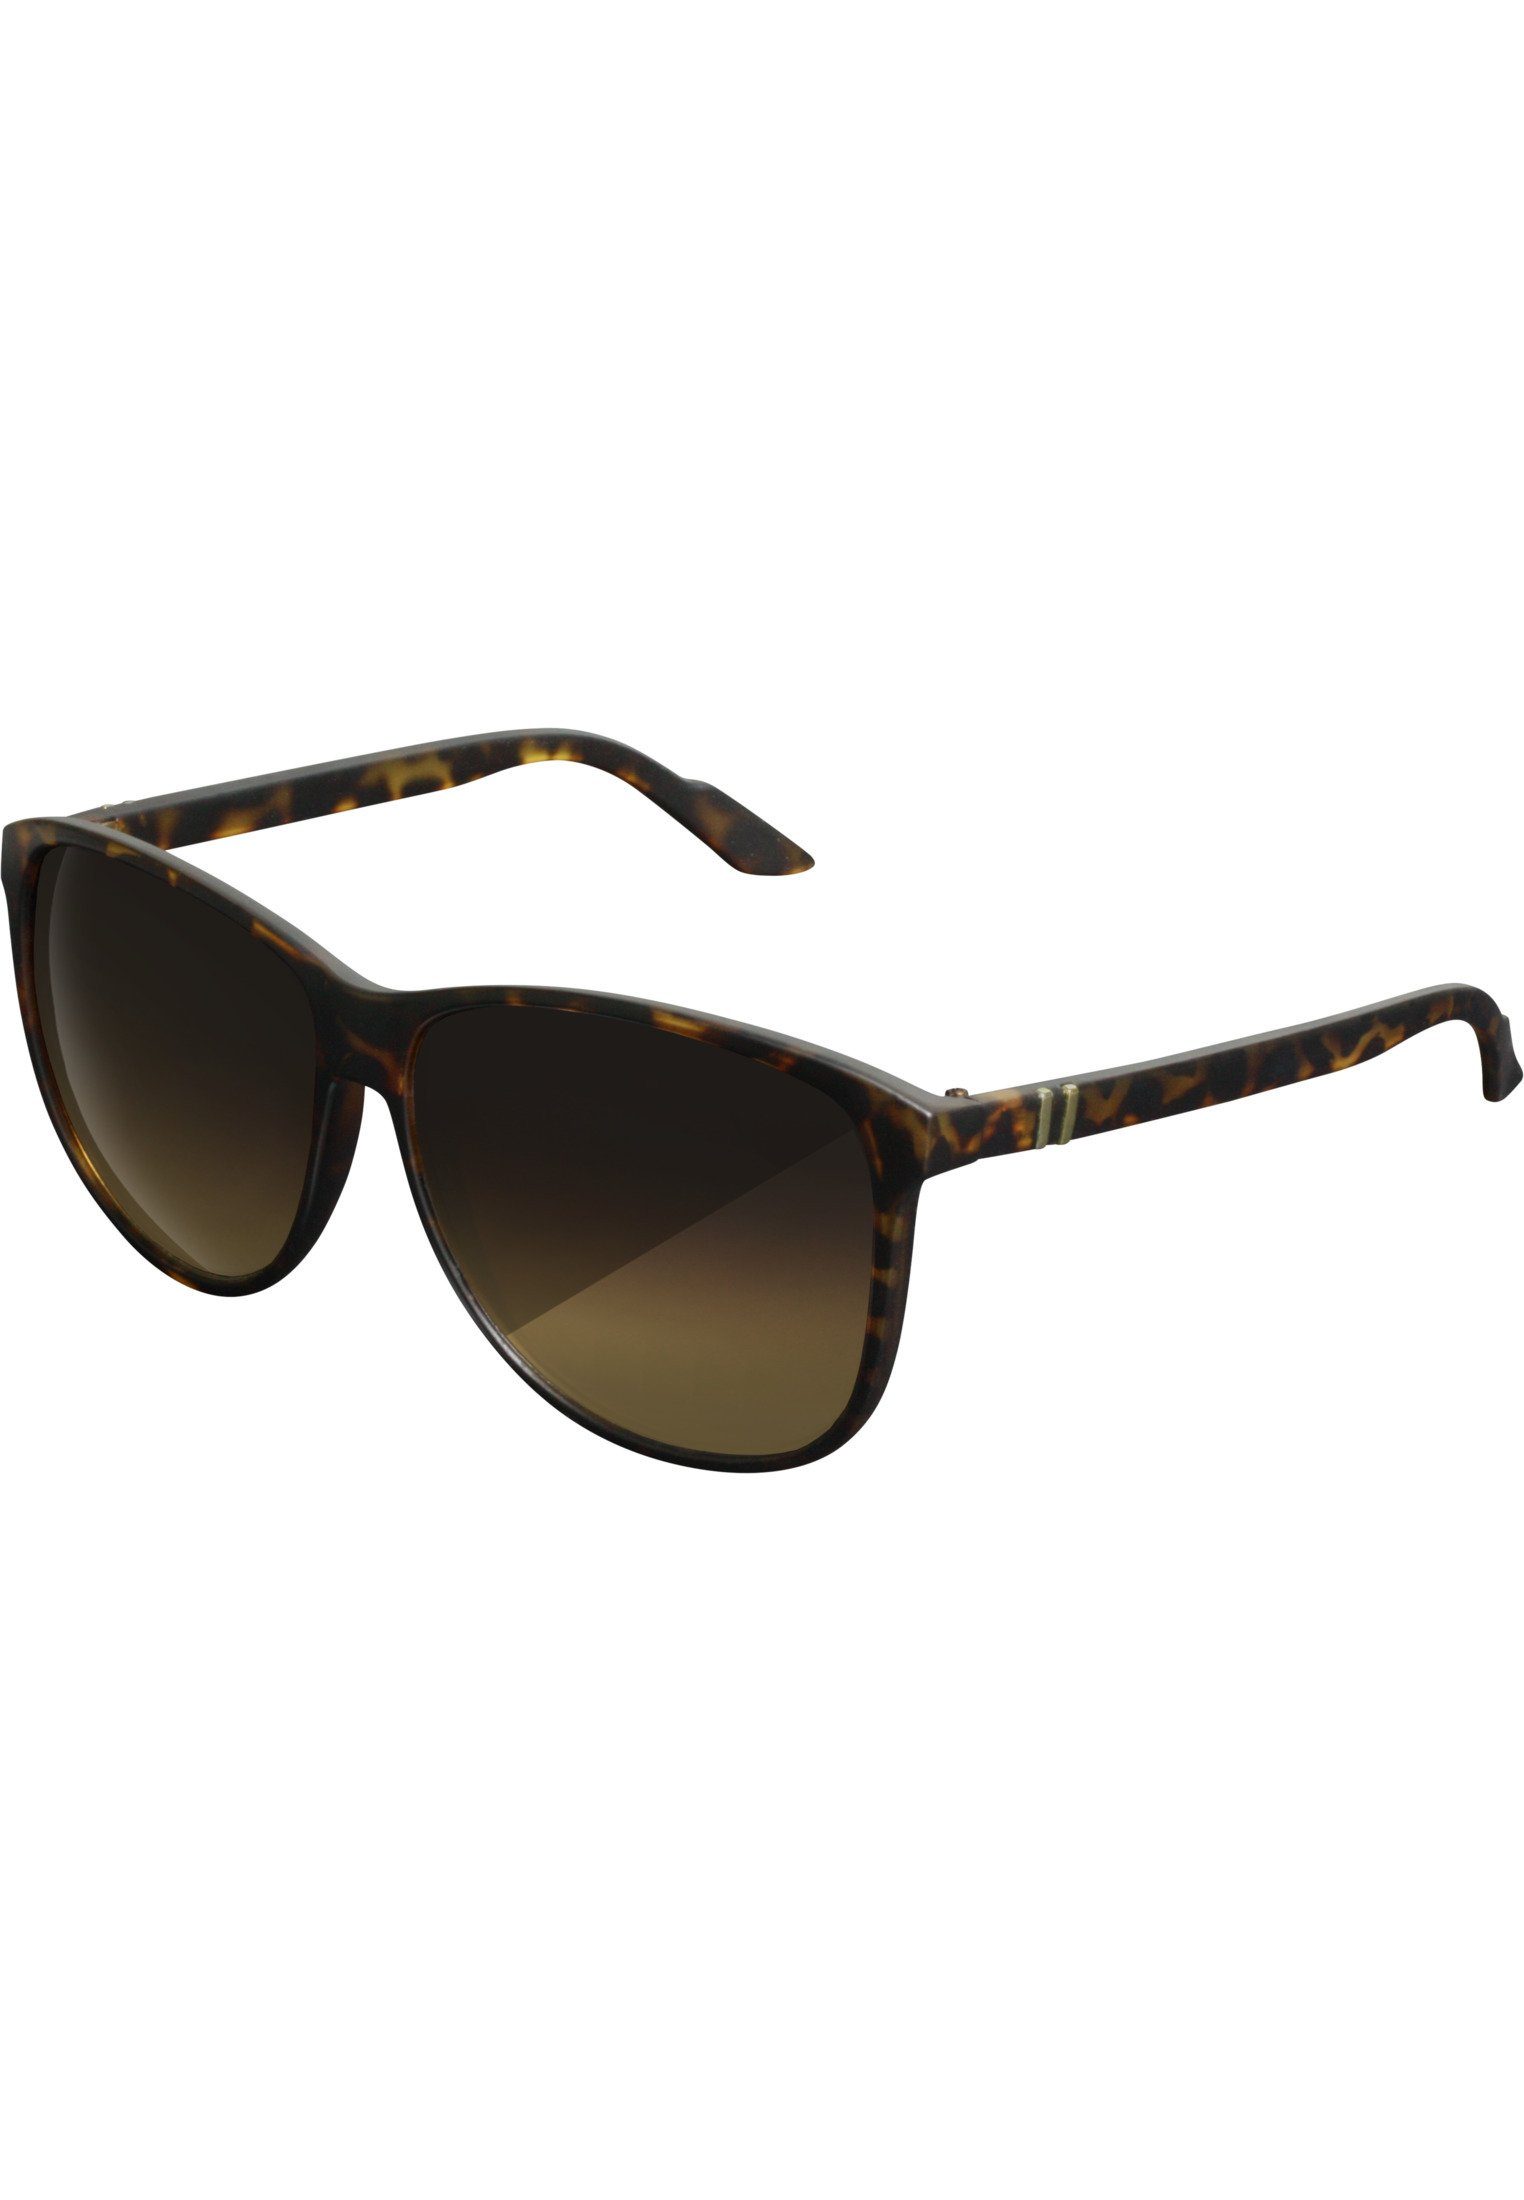 MSTRDS Sonnenbrille Accessoires Sunglasses Chirwa amber | Sonnenbrillen